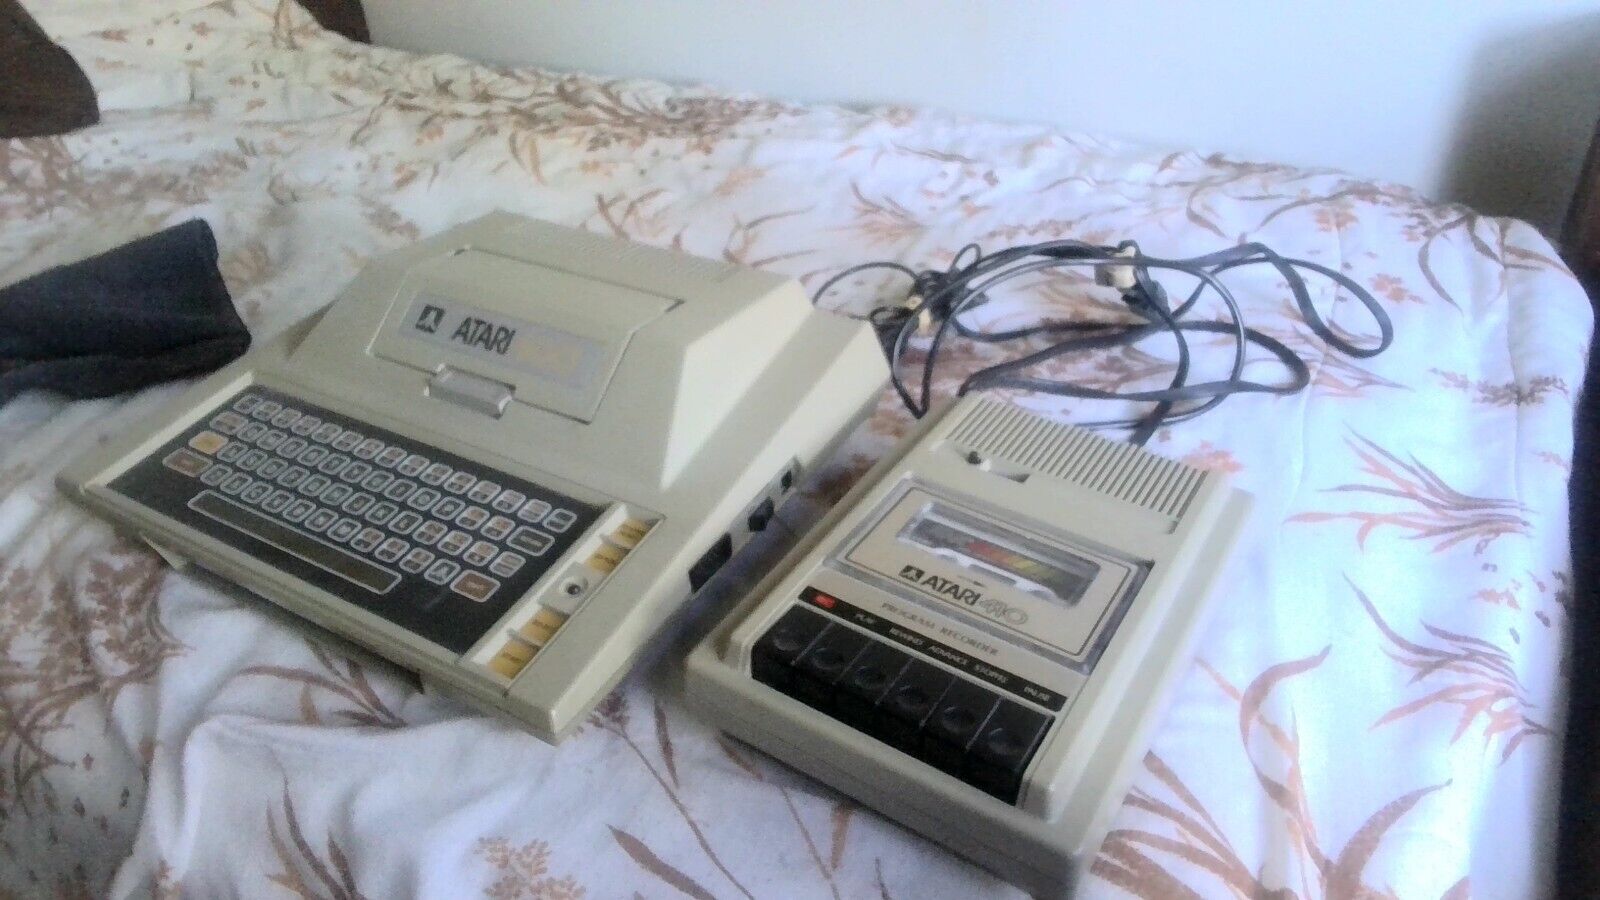 Atari 400 with program recorder